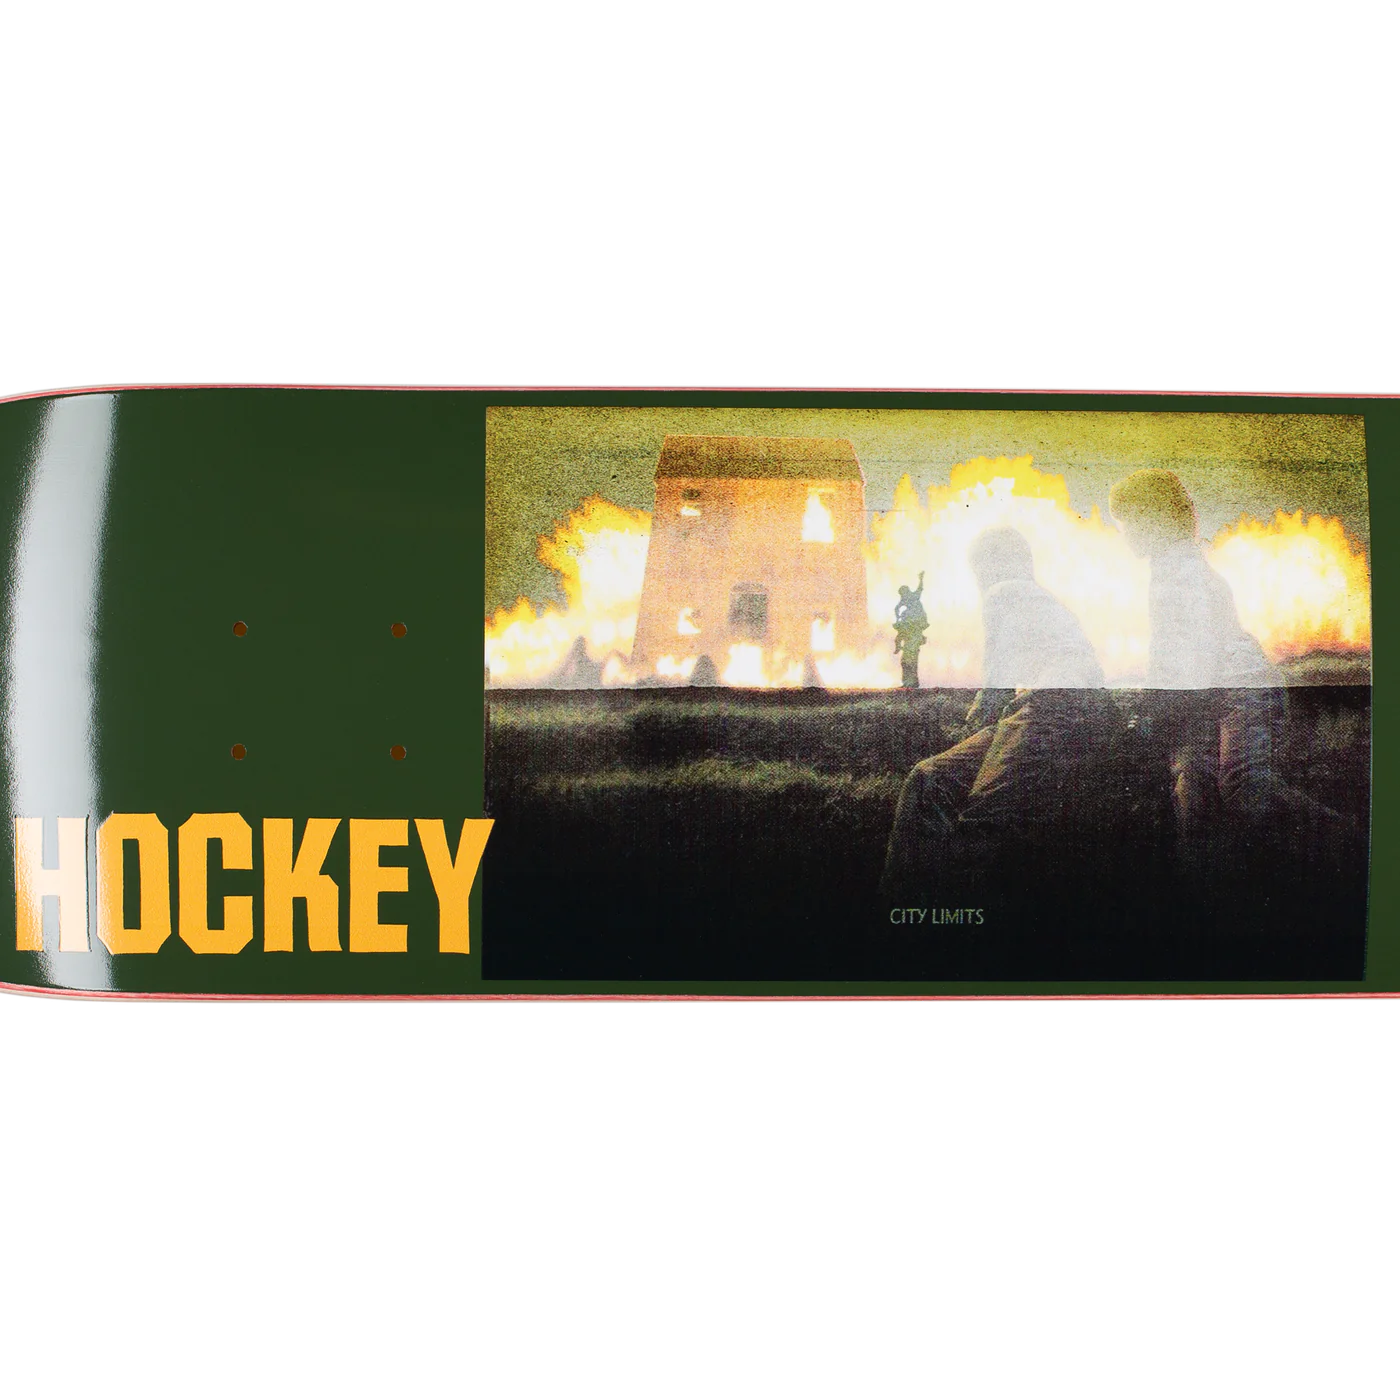 Hockey City Limits (Diego Todd) 8.25"